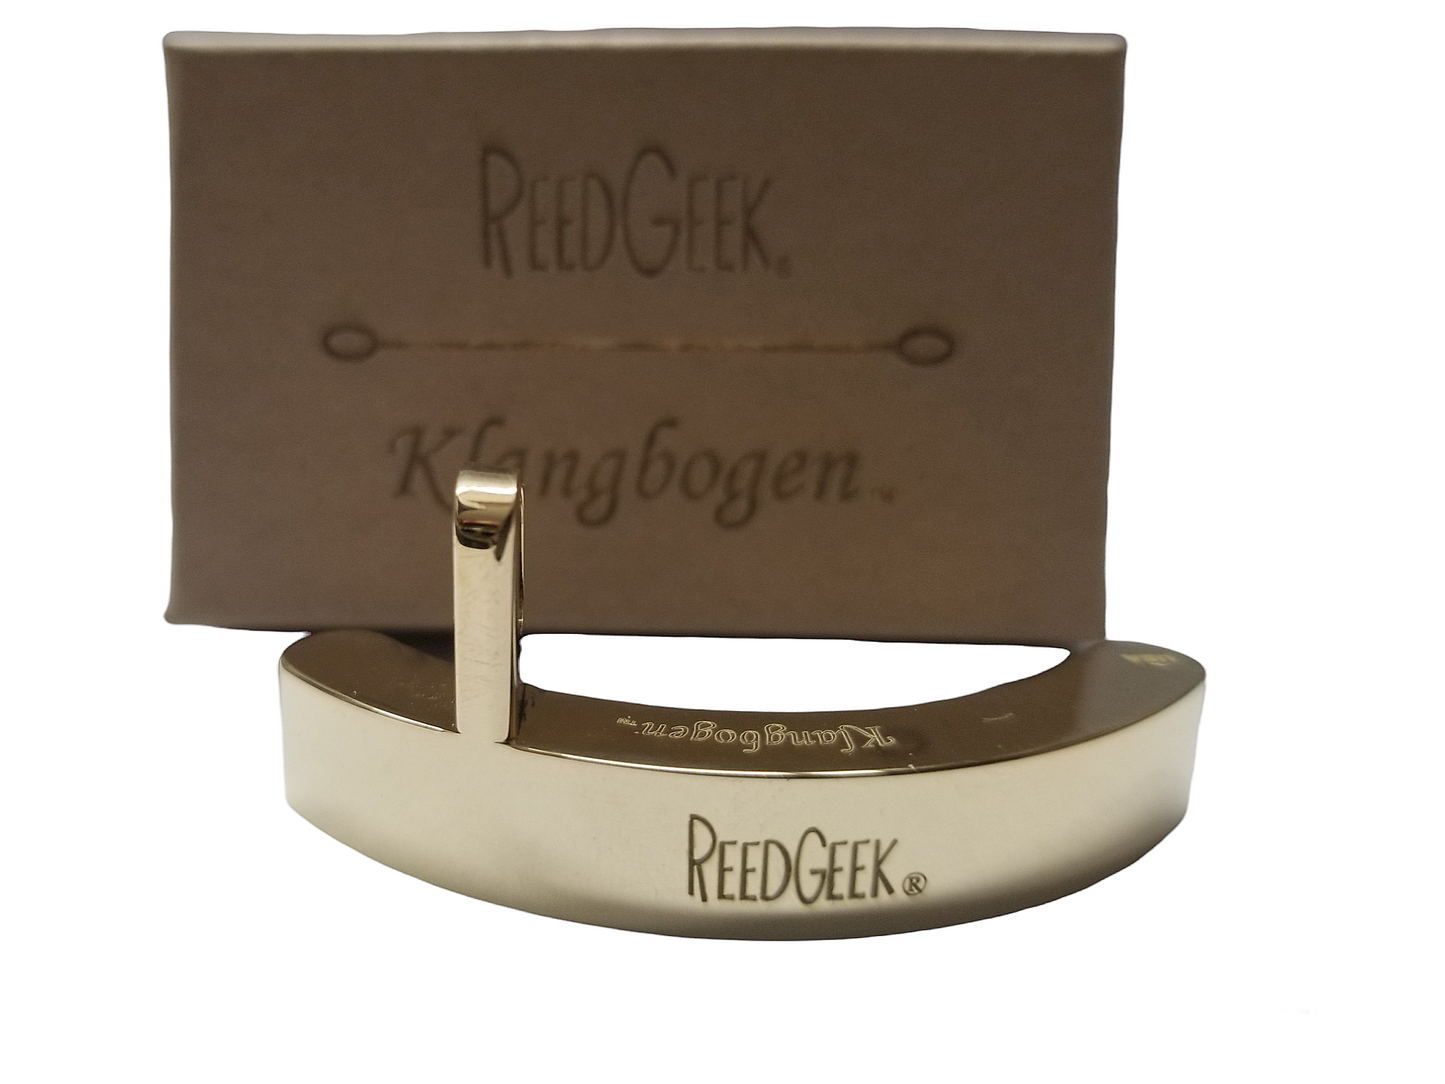 ReedGeek One-Piece Saxophone Klangbogen - Premium Saxophone Accessories from REEDGEEK - Just $86.95! Shop now at Poppa's Music